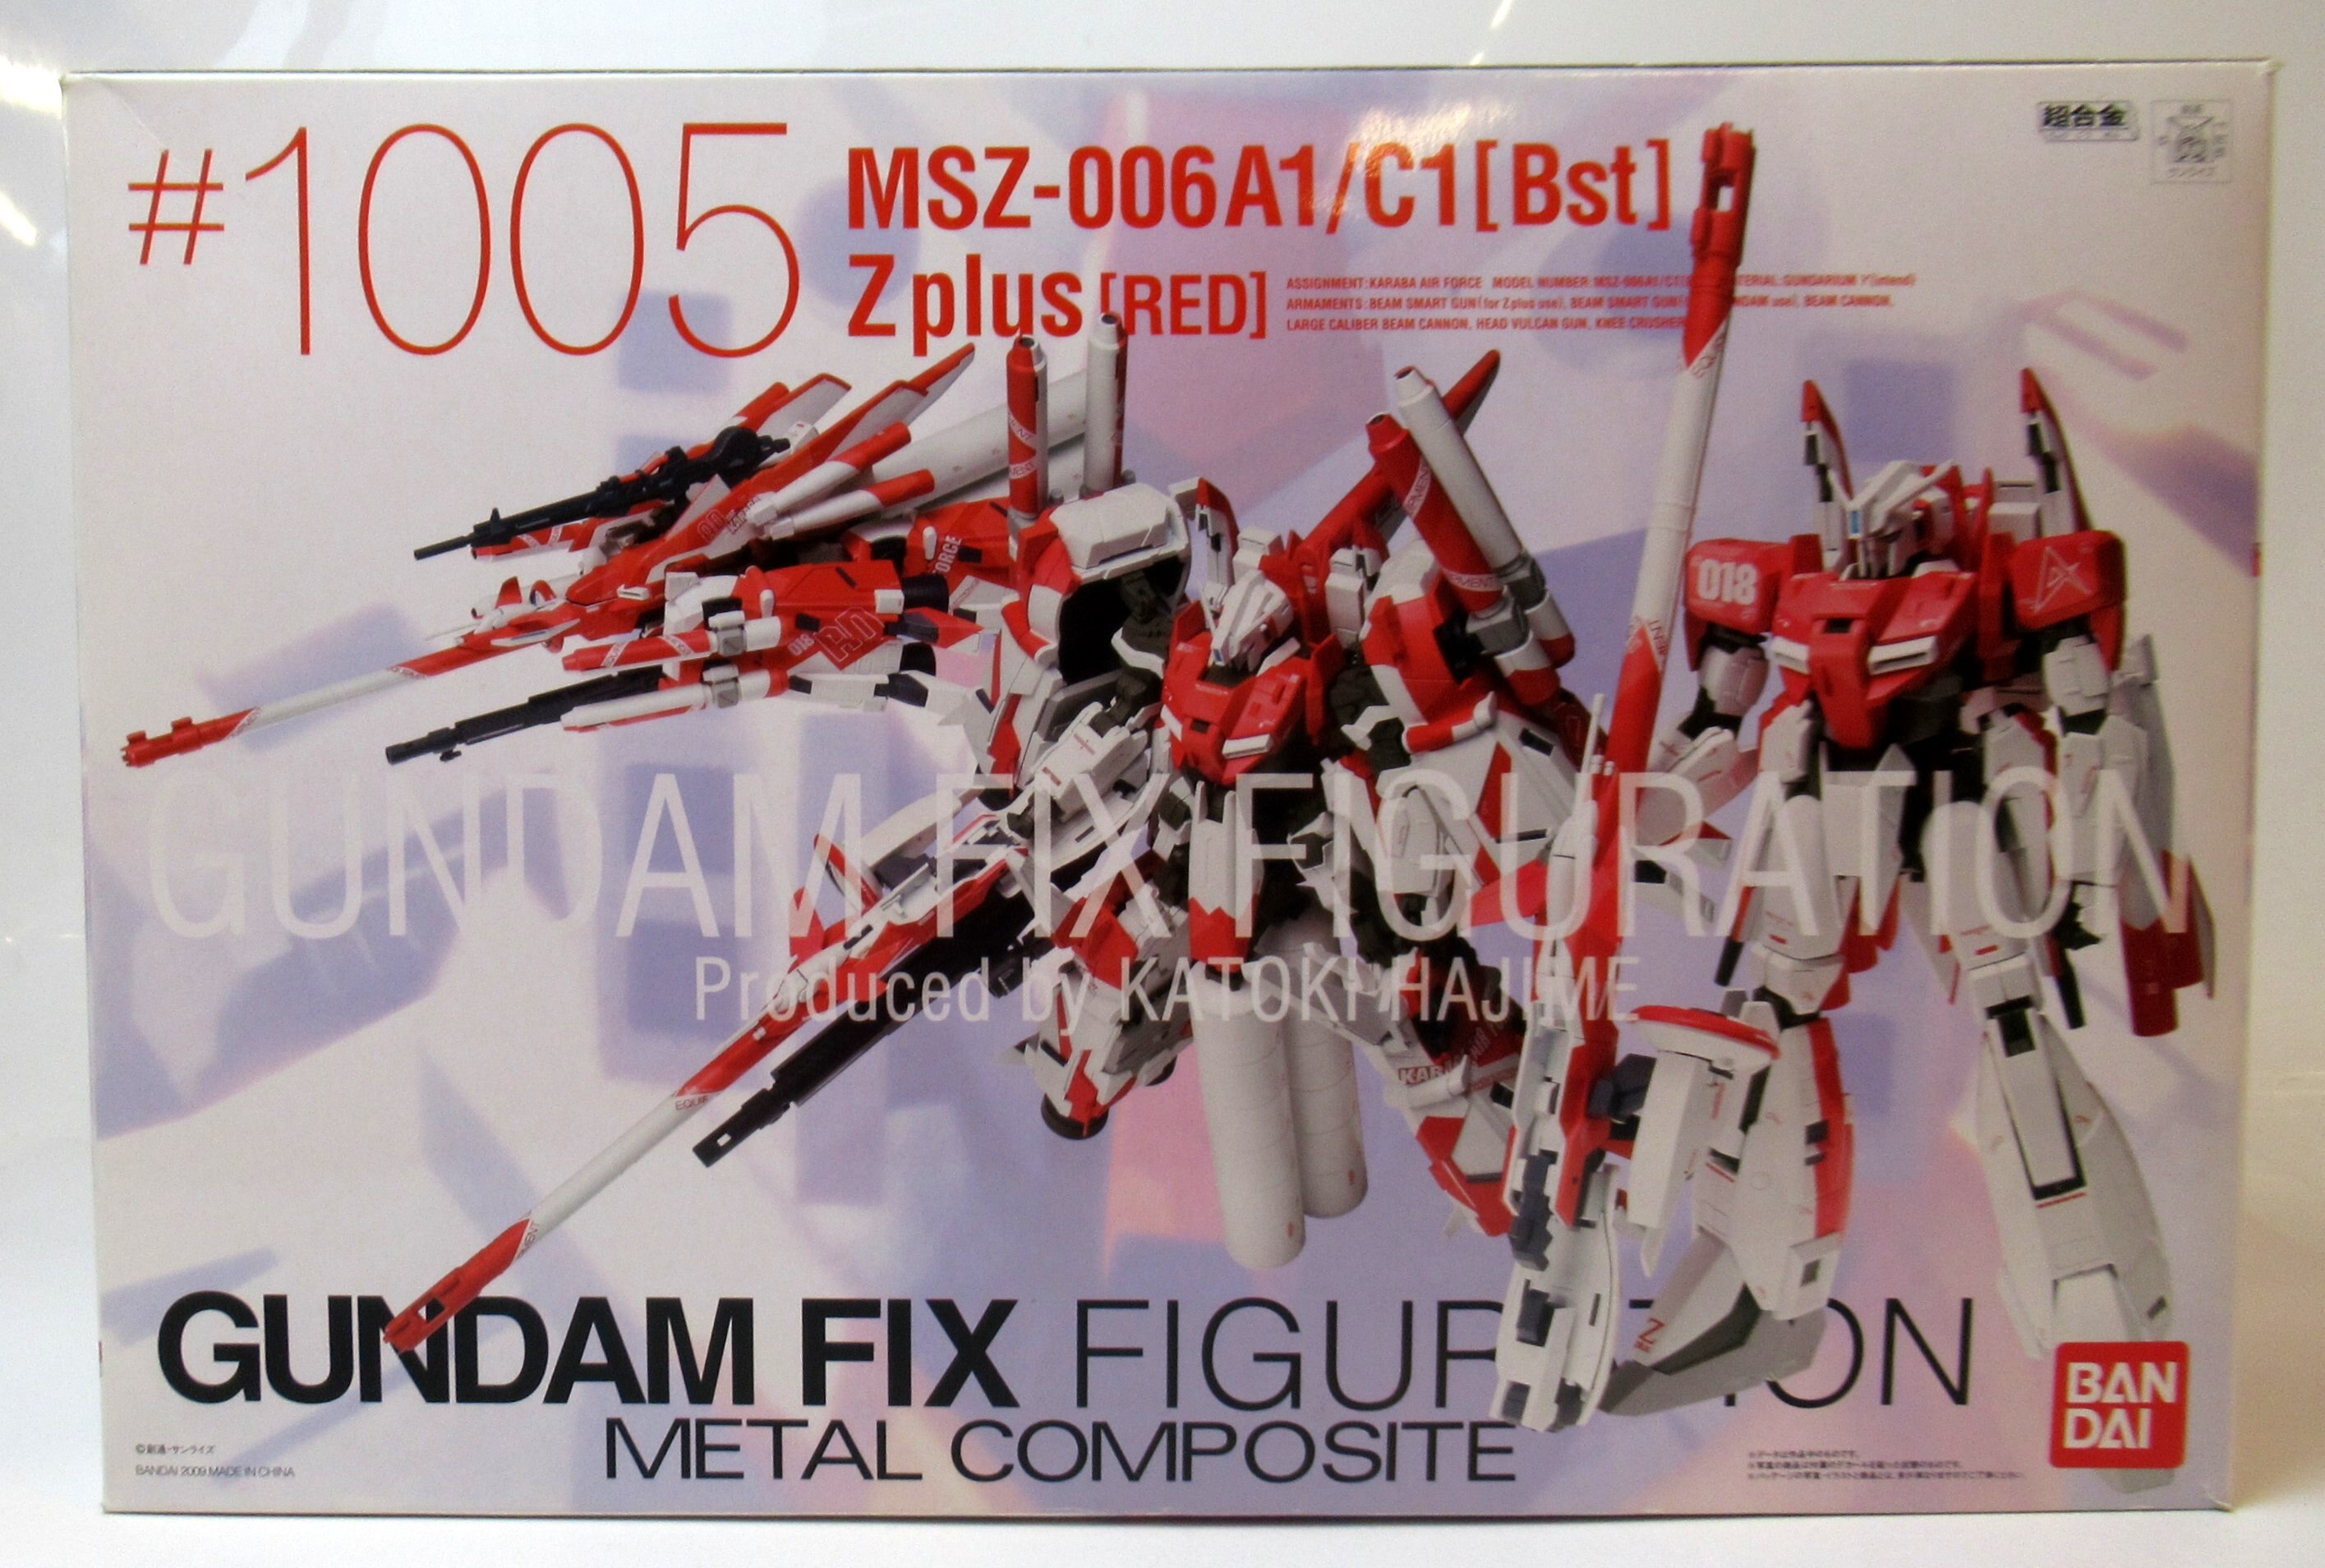 BANDAI GUNDAM FIX FIGURATION METAL COMPOSITE MSZ-006A1/C1 Bst Z ...